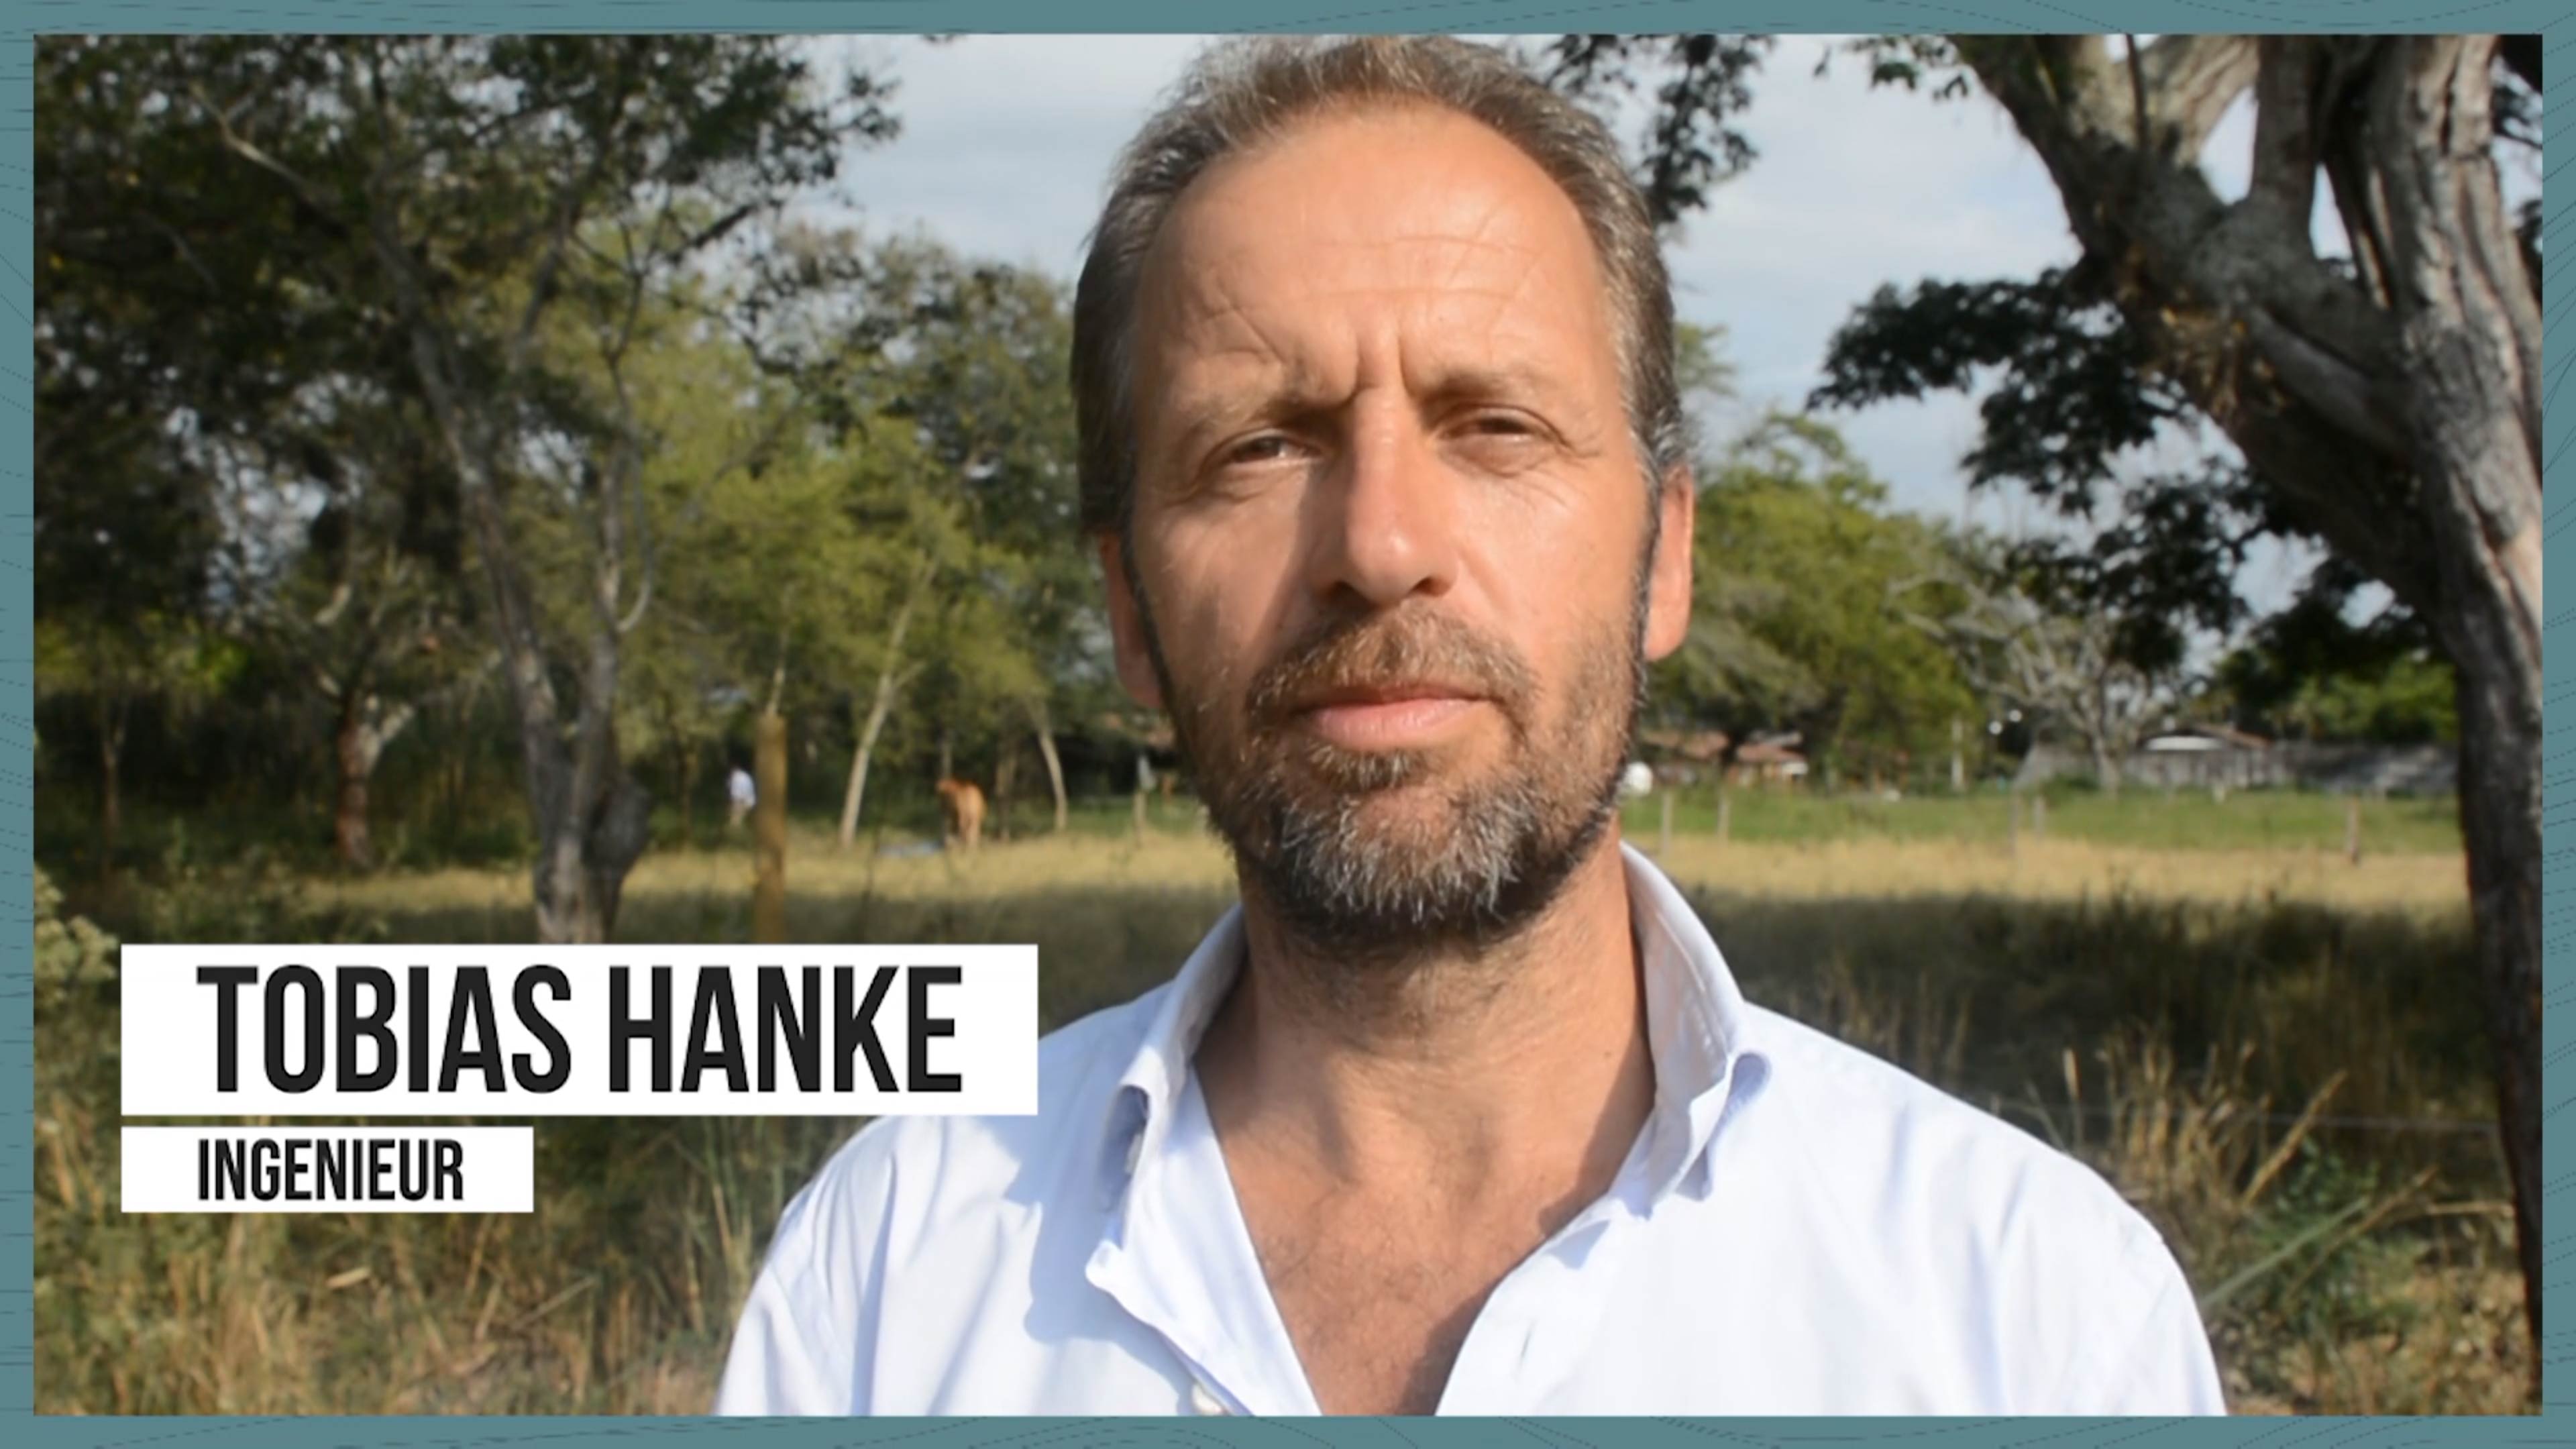 HANKE_projekte-crowdfunding